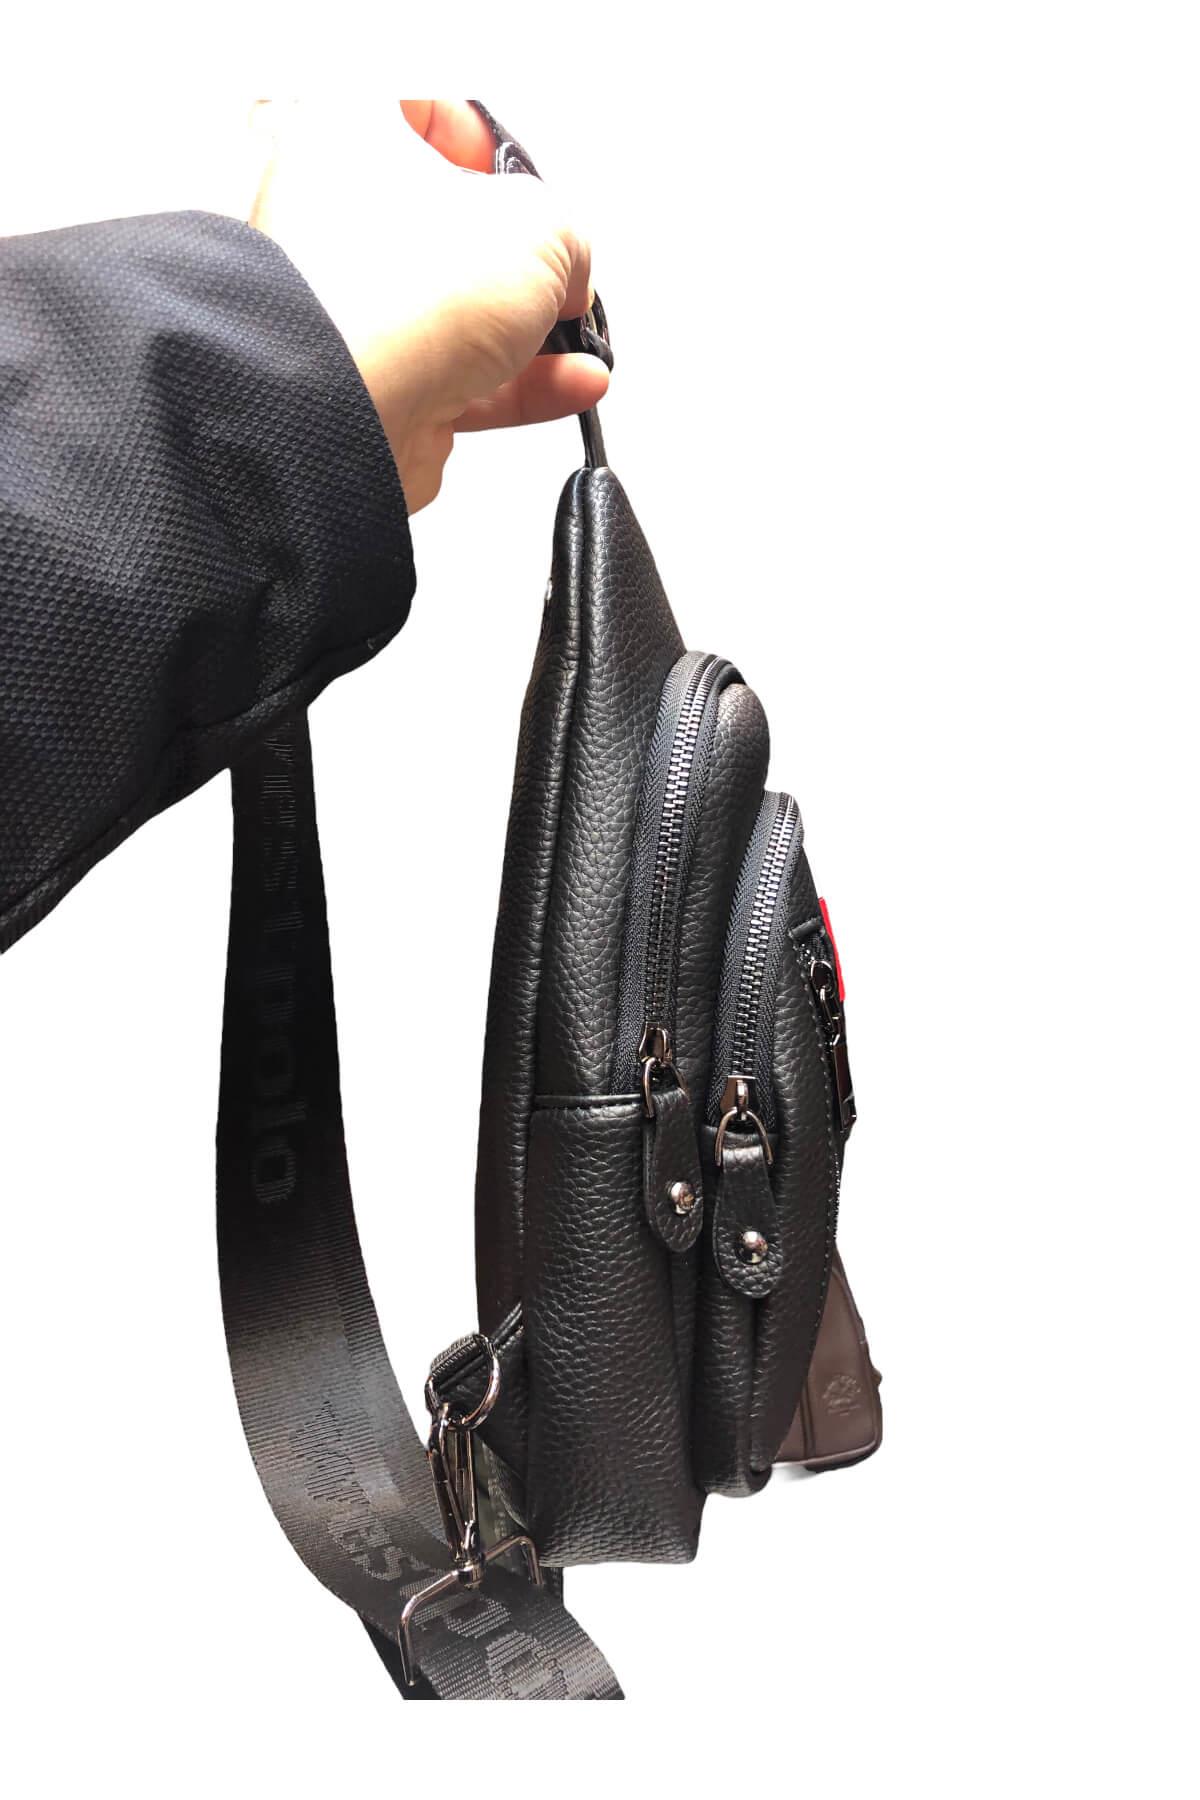 WestPolo Erkek Bady bags çanta 28cm15 westpolo erkek çanta |  elizabell.com.tr